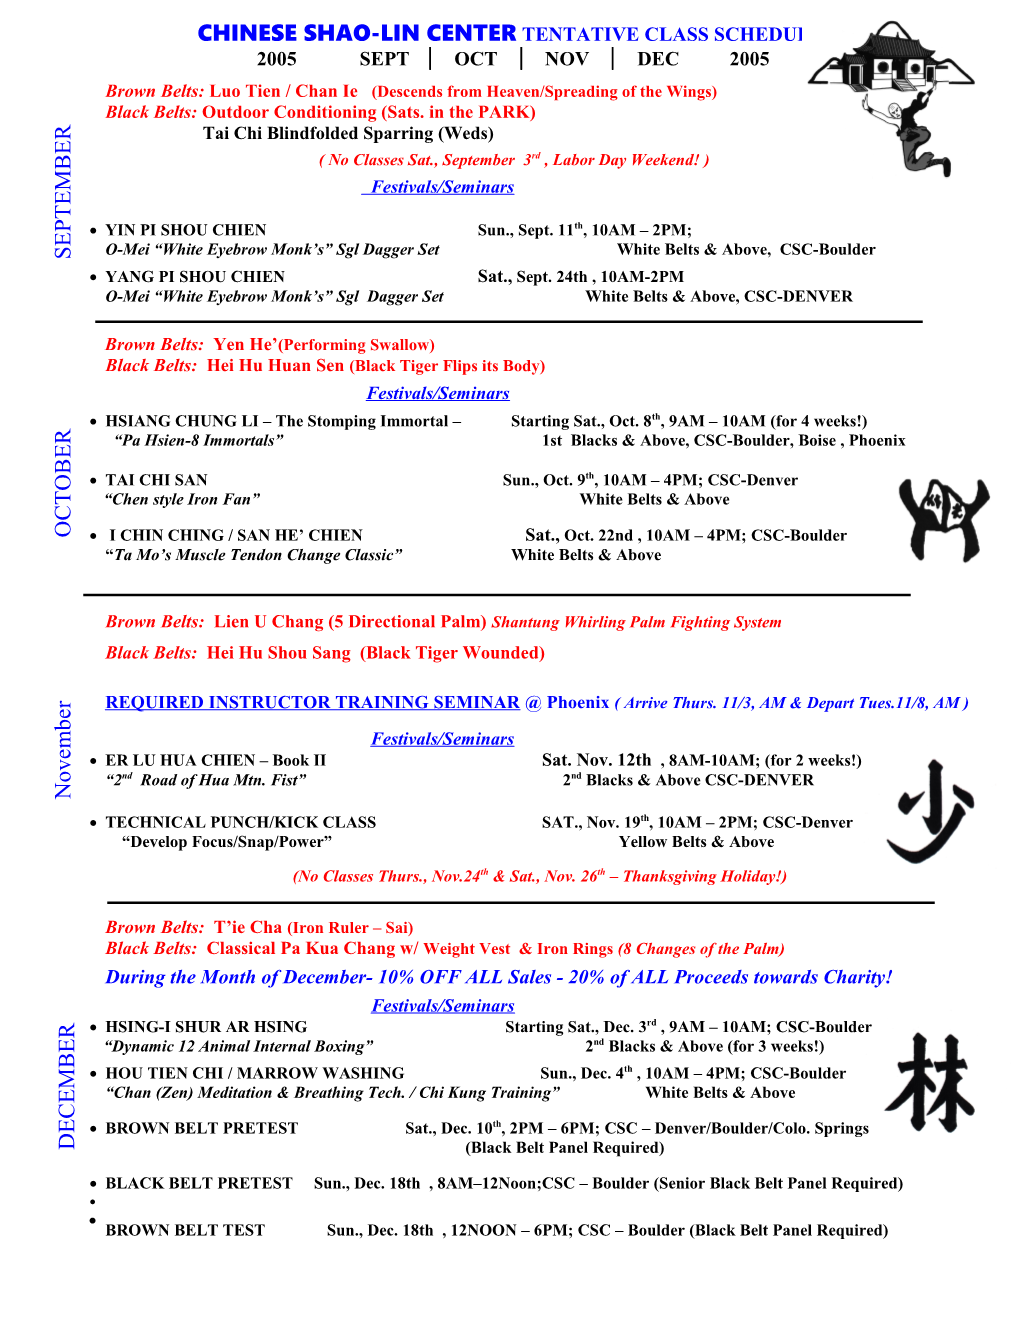 Chinese Shao-Lin Center Tentative Class Schedule